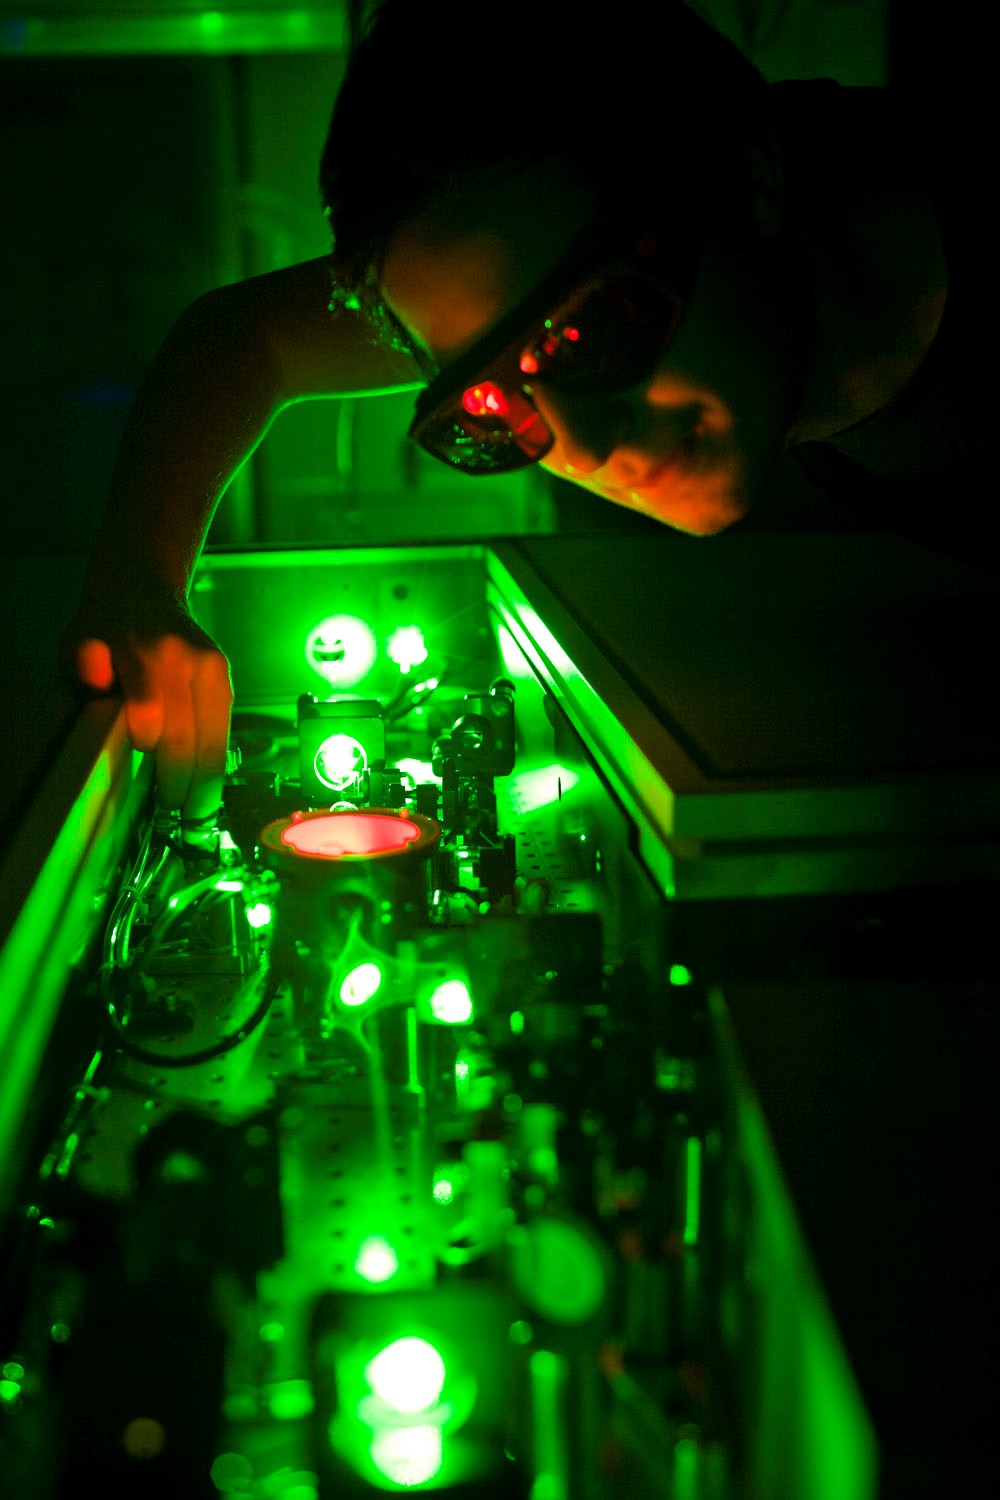 Blick ins Laserphysik-Labor